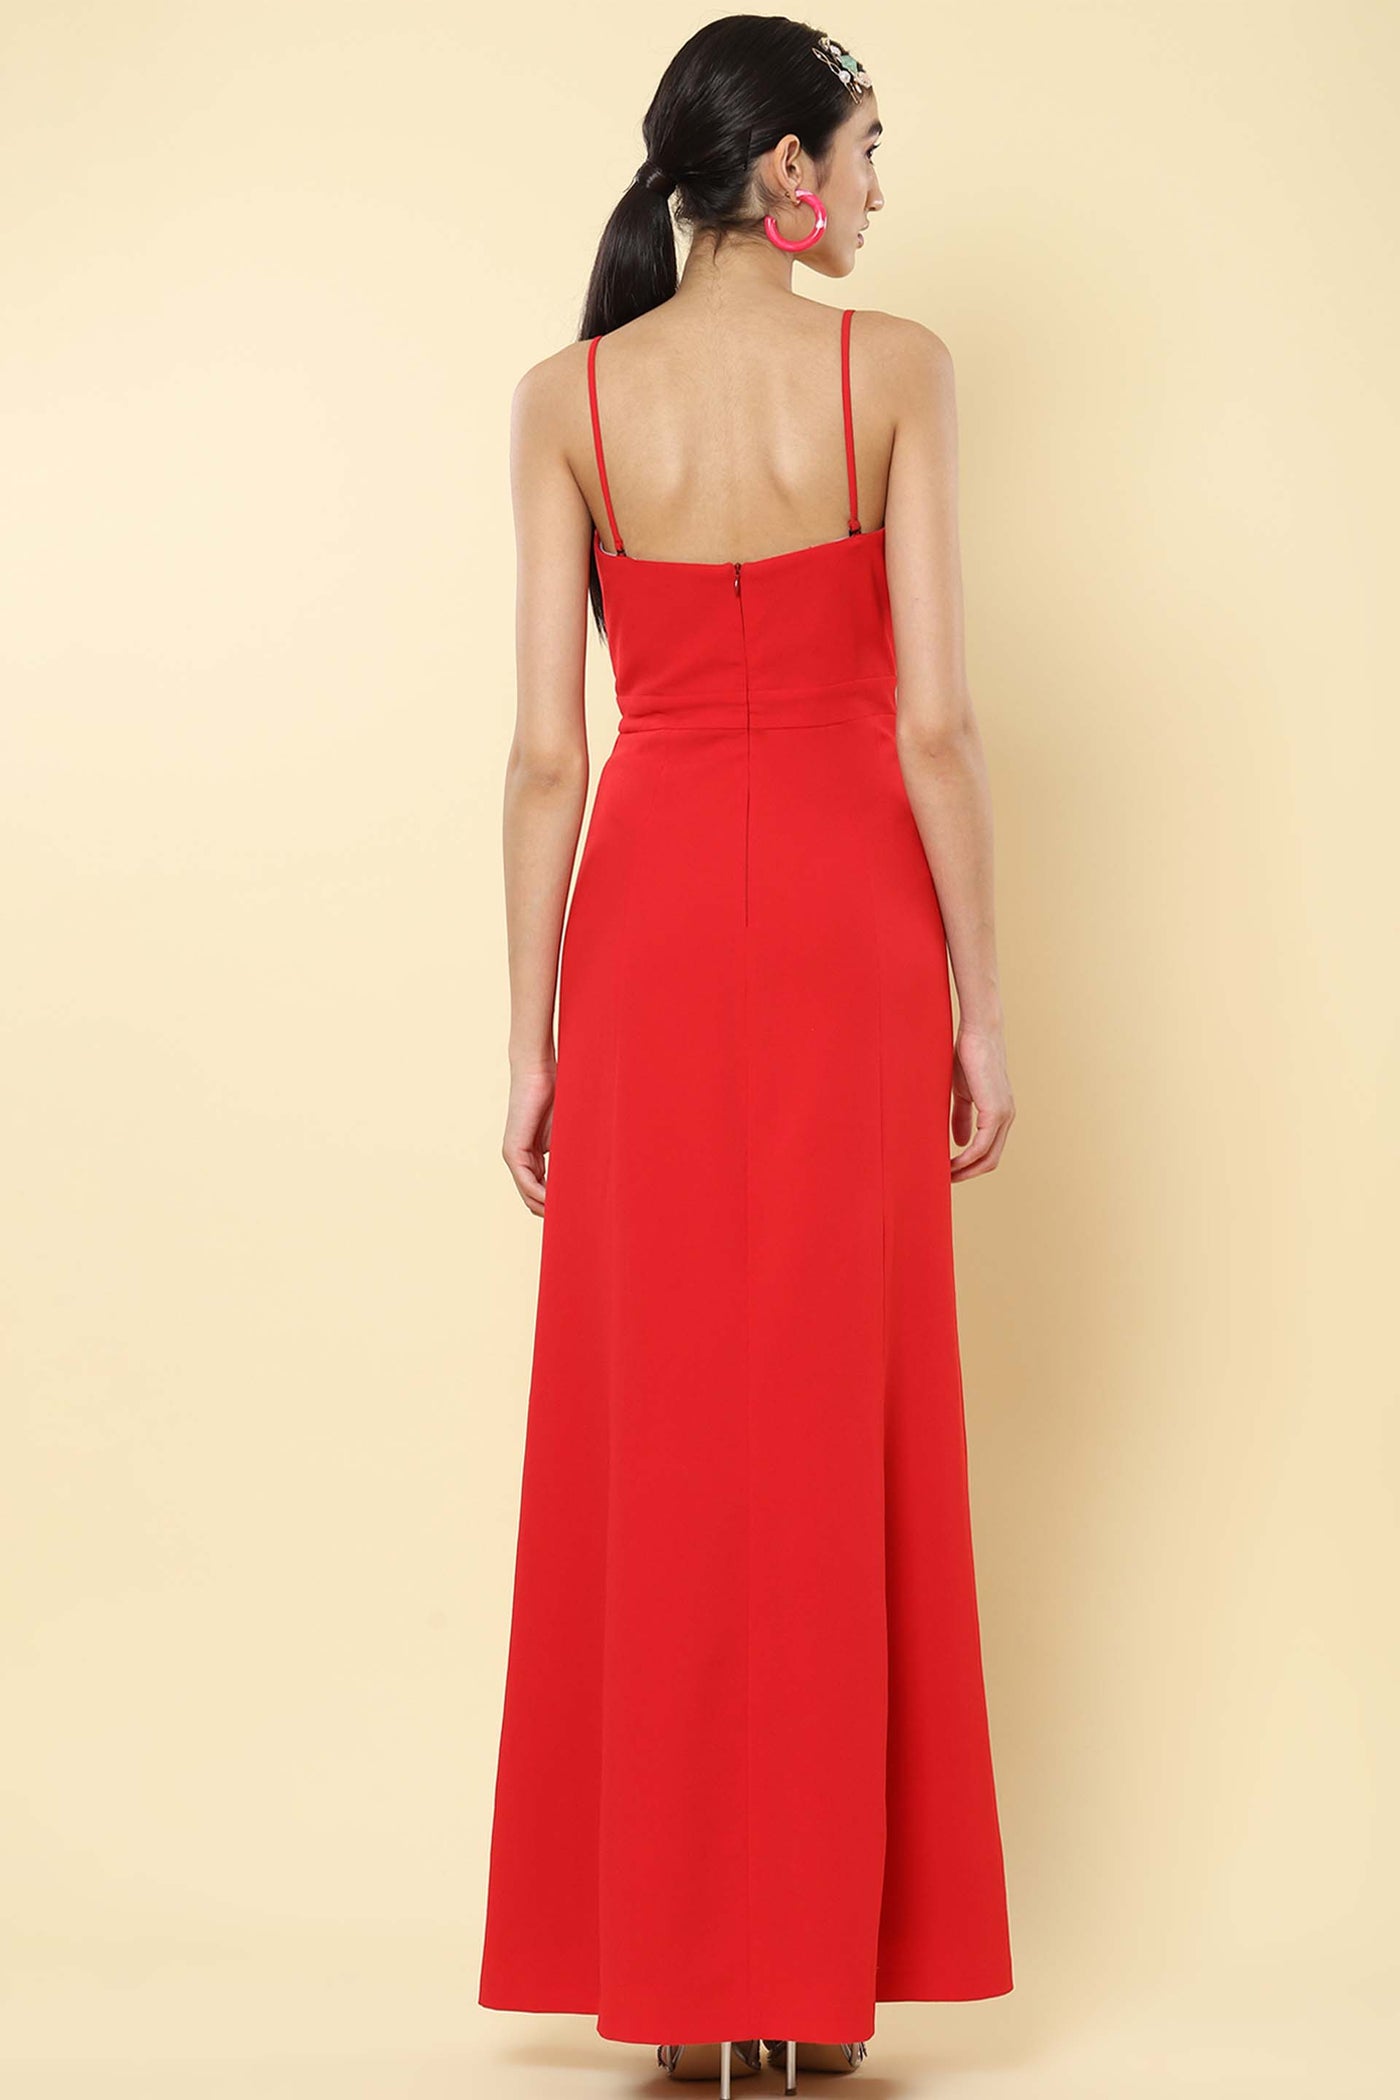 Label ritu kumar Red Strappy Maxi Dress western indian designer wear online shopping melange singapore